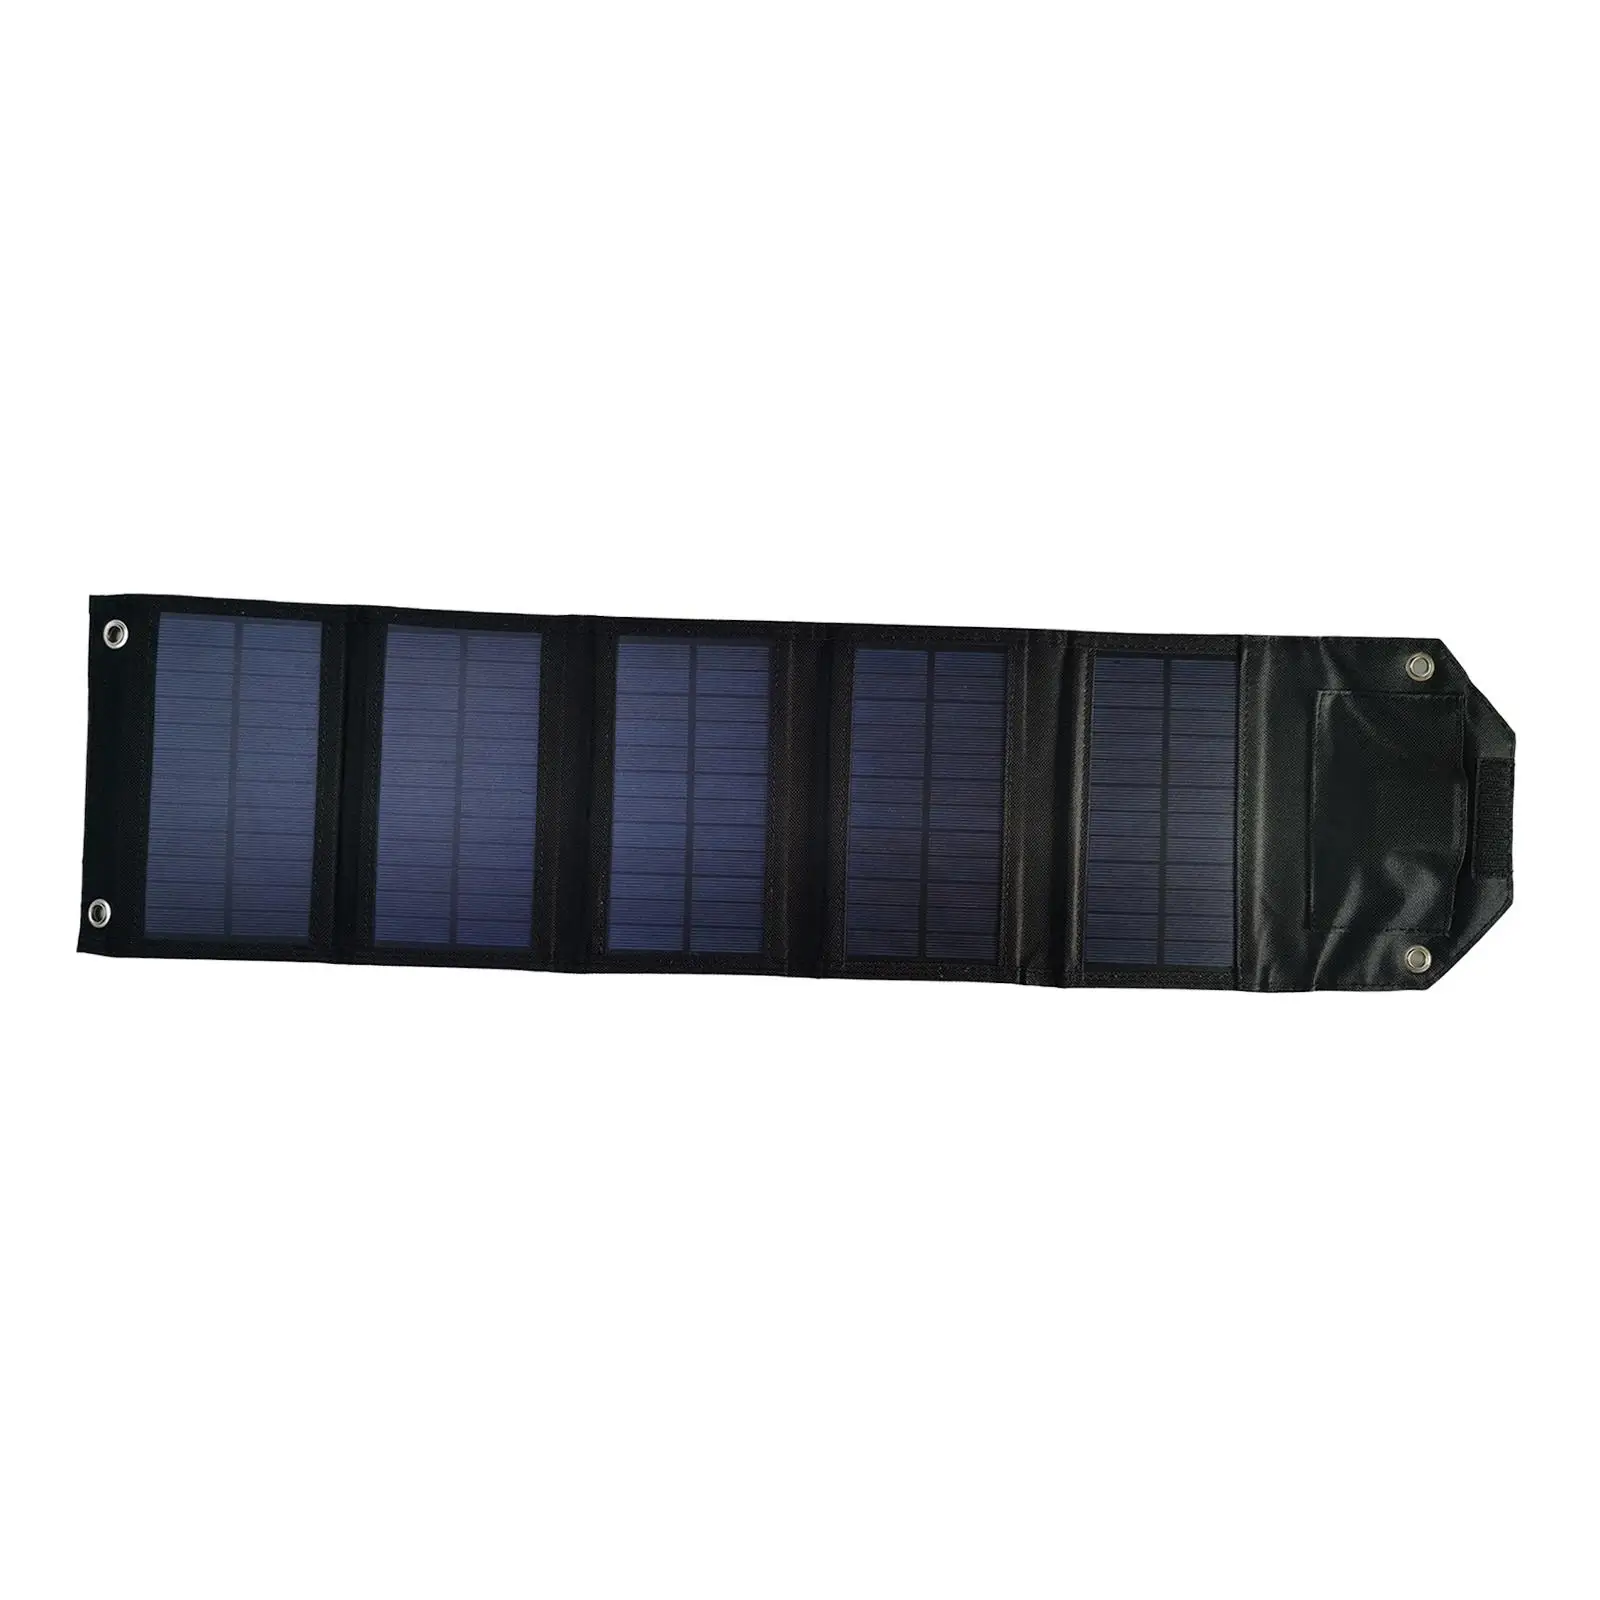 Folding Solar Panel Charger Home Portable Solar Panel 5V USB Output for Cellphone Travel Backpacking Solar Generator Laptop